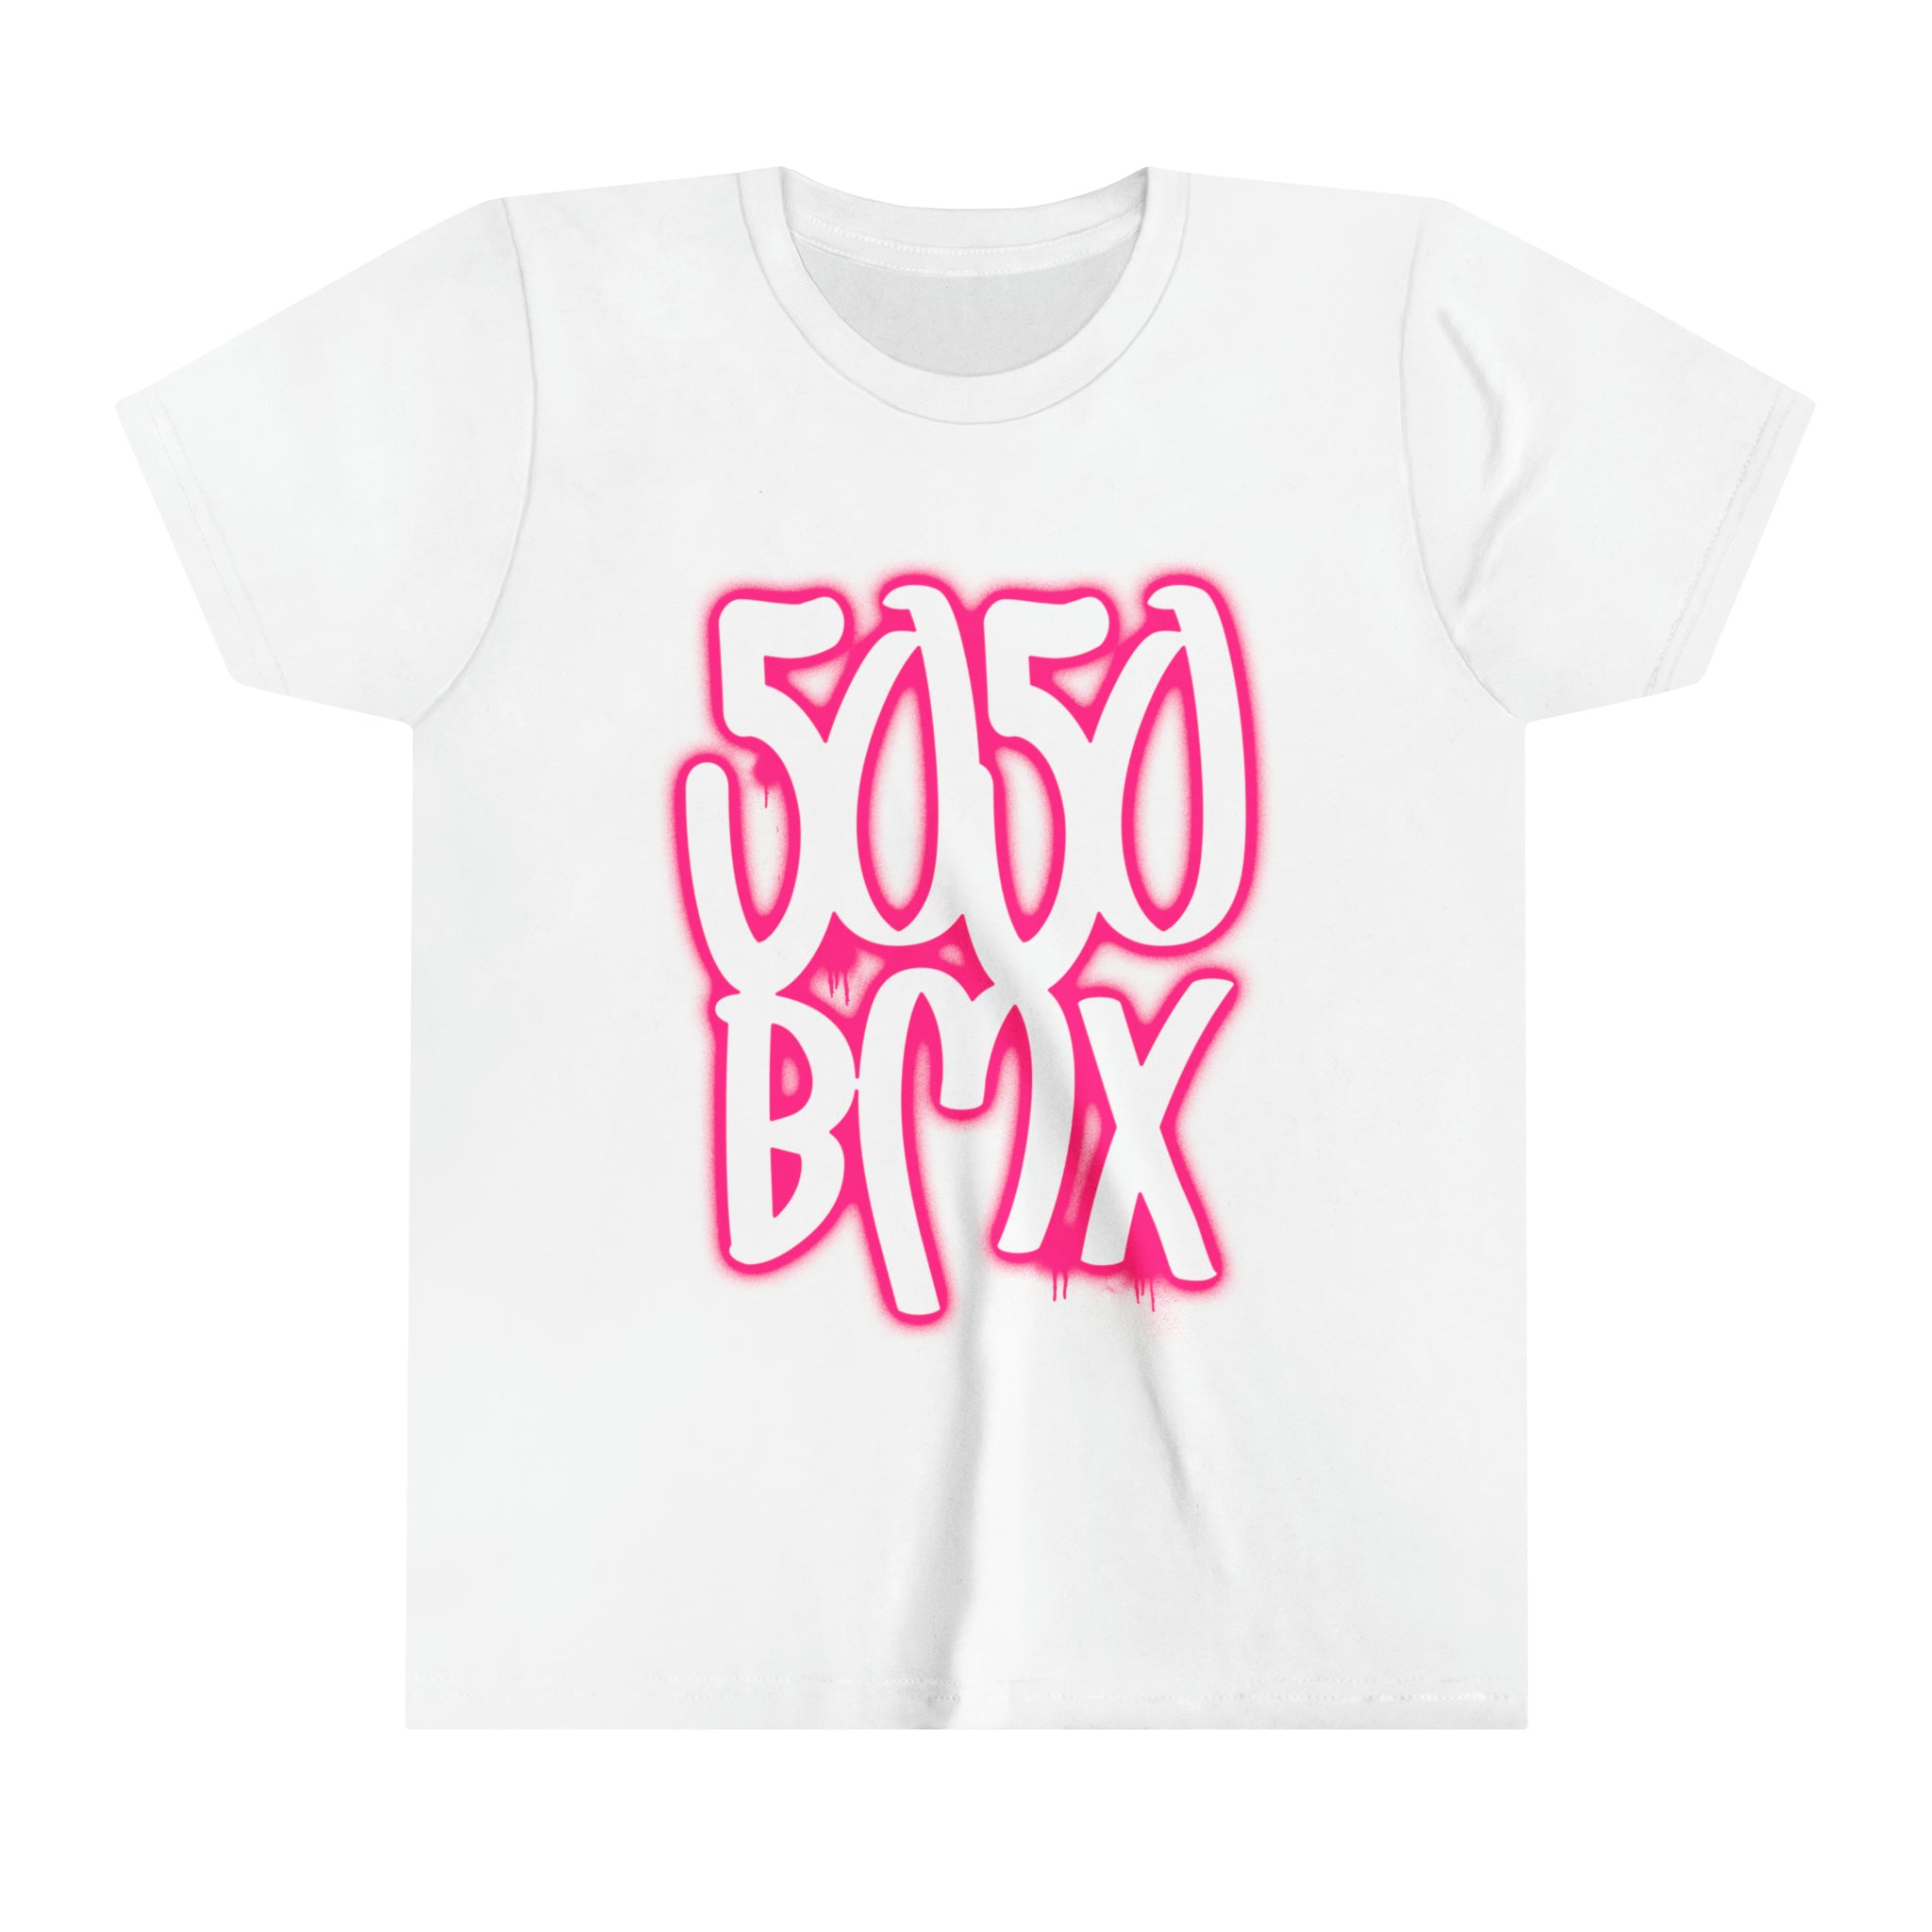 5050bmx Graffiti (Pink) - Youth Short Sleeve Tee